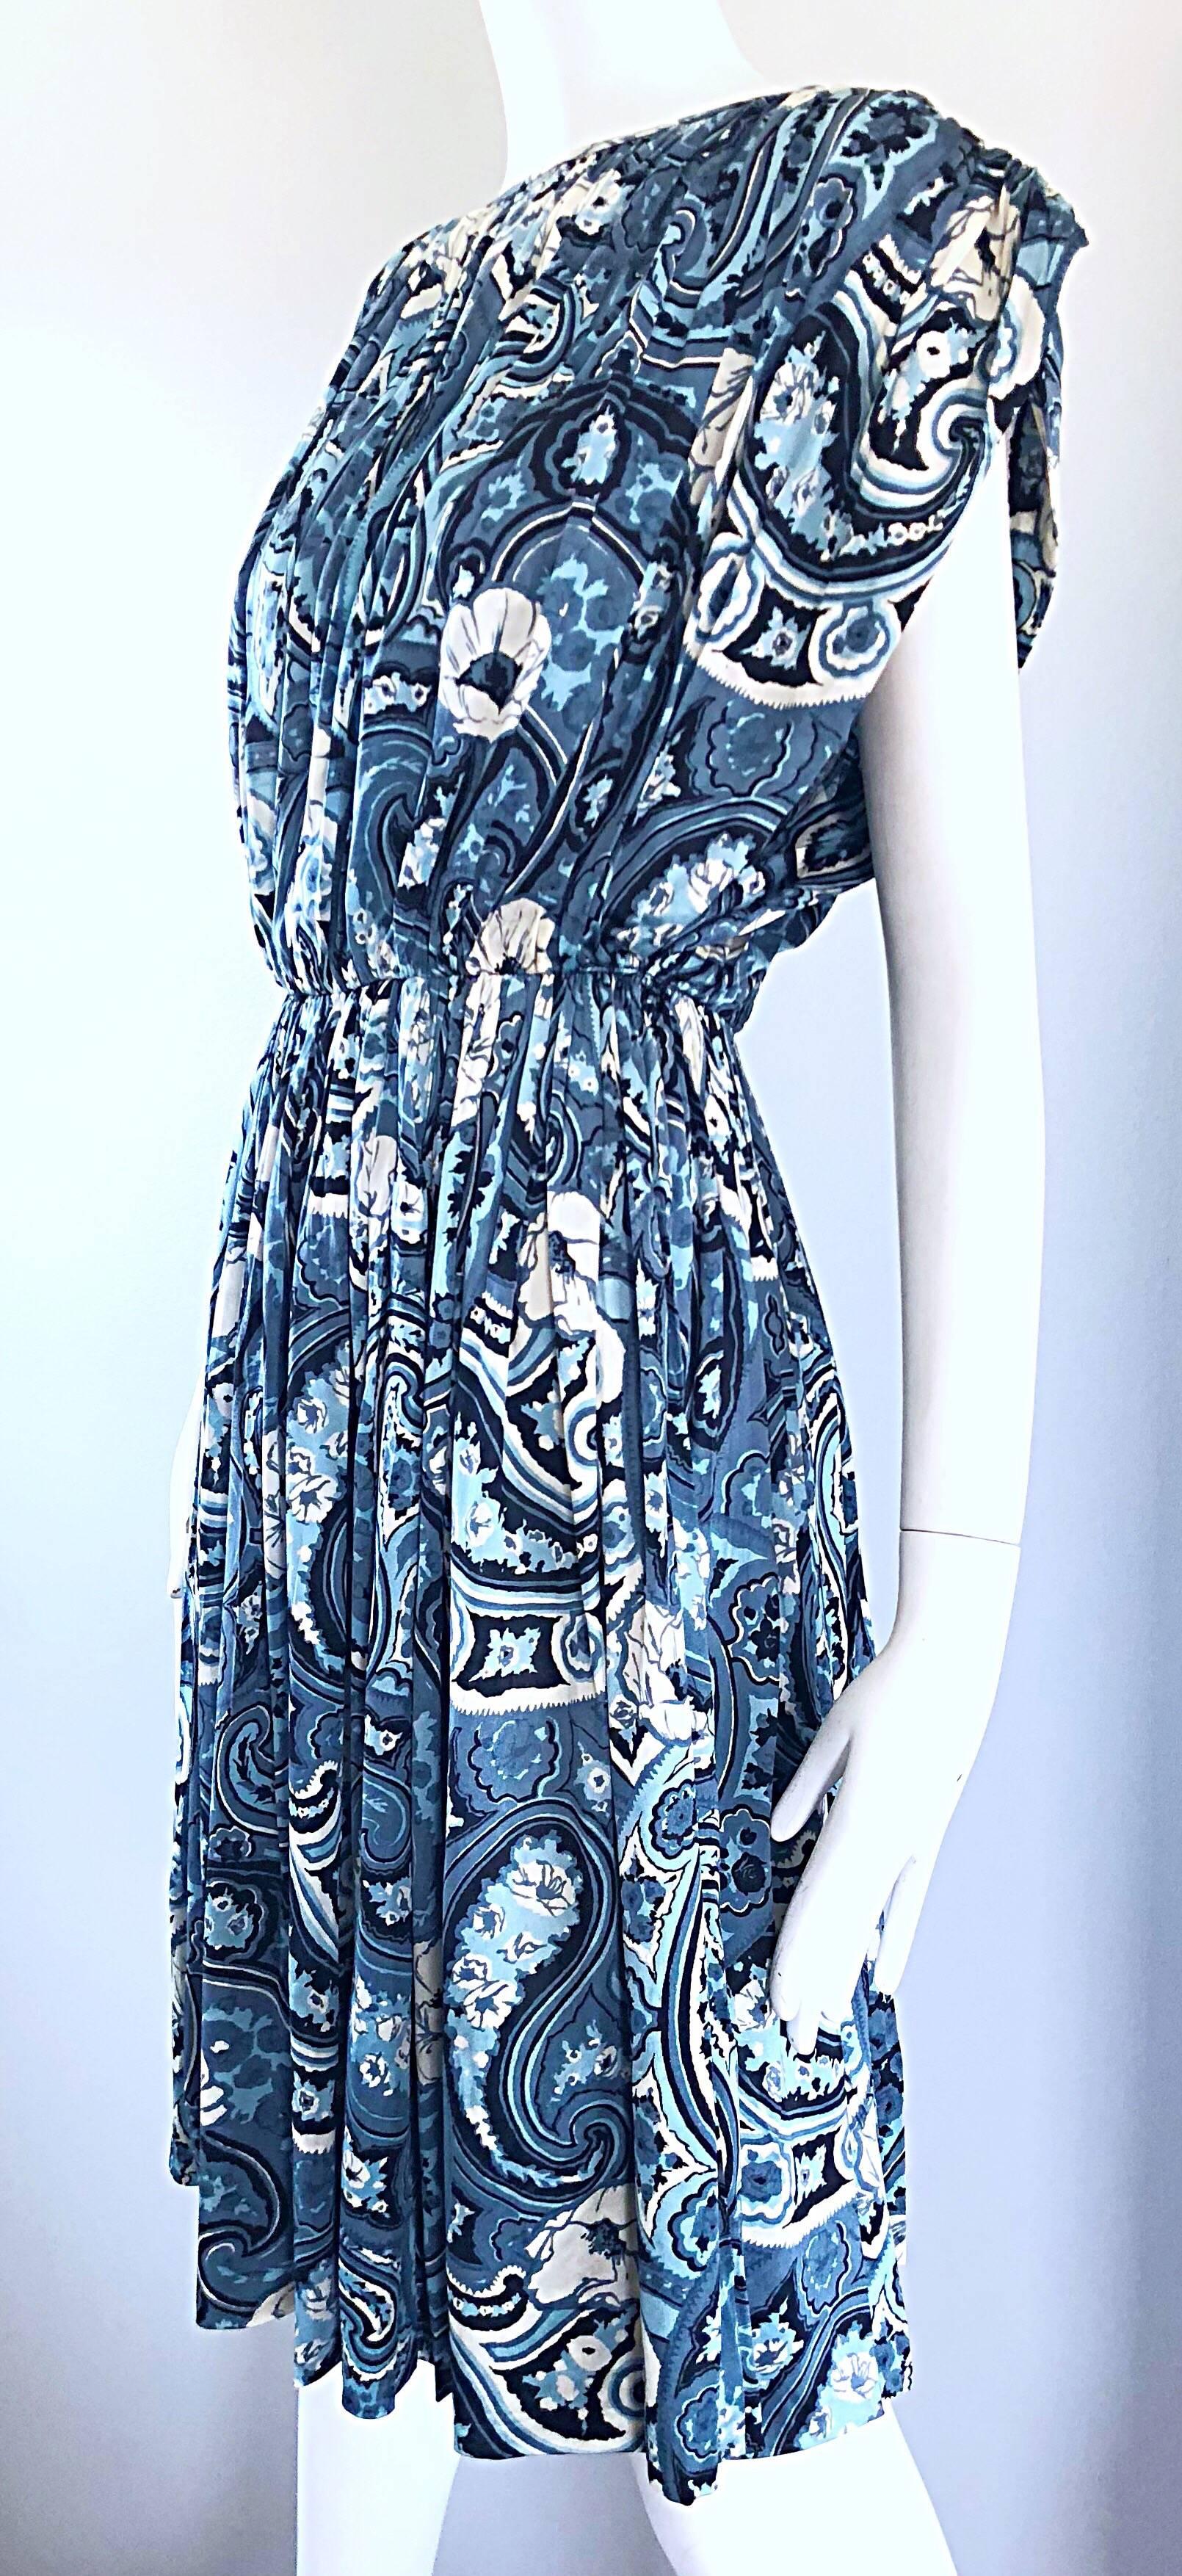 blue white paisley dress